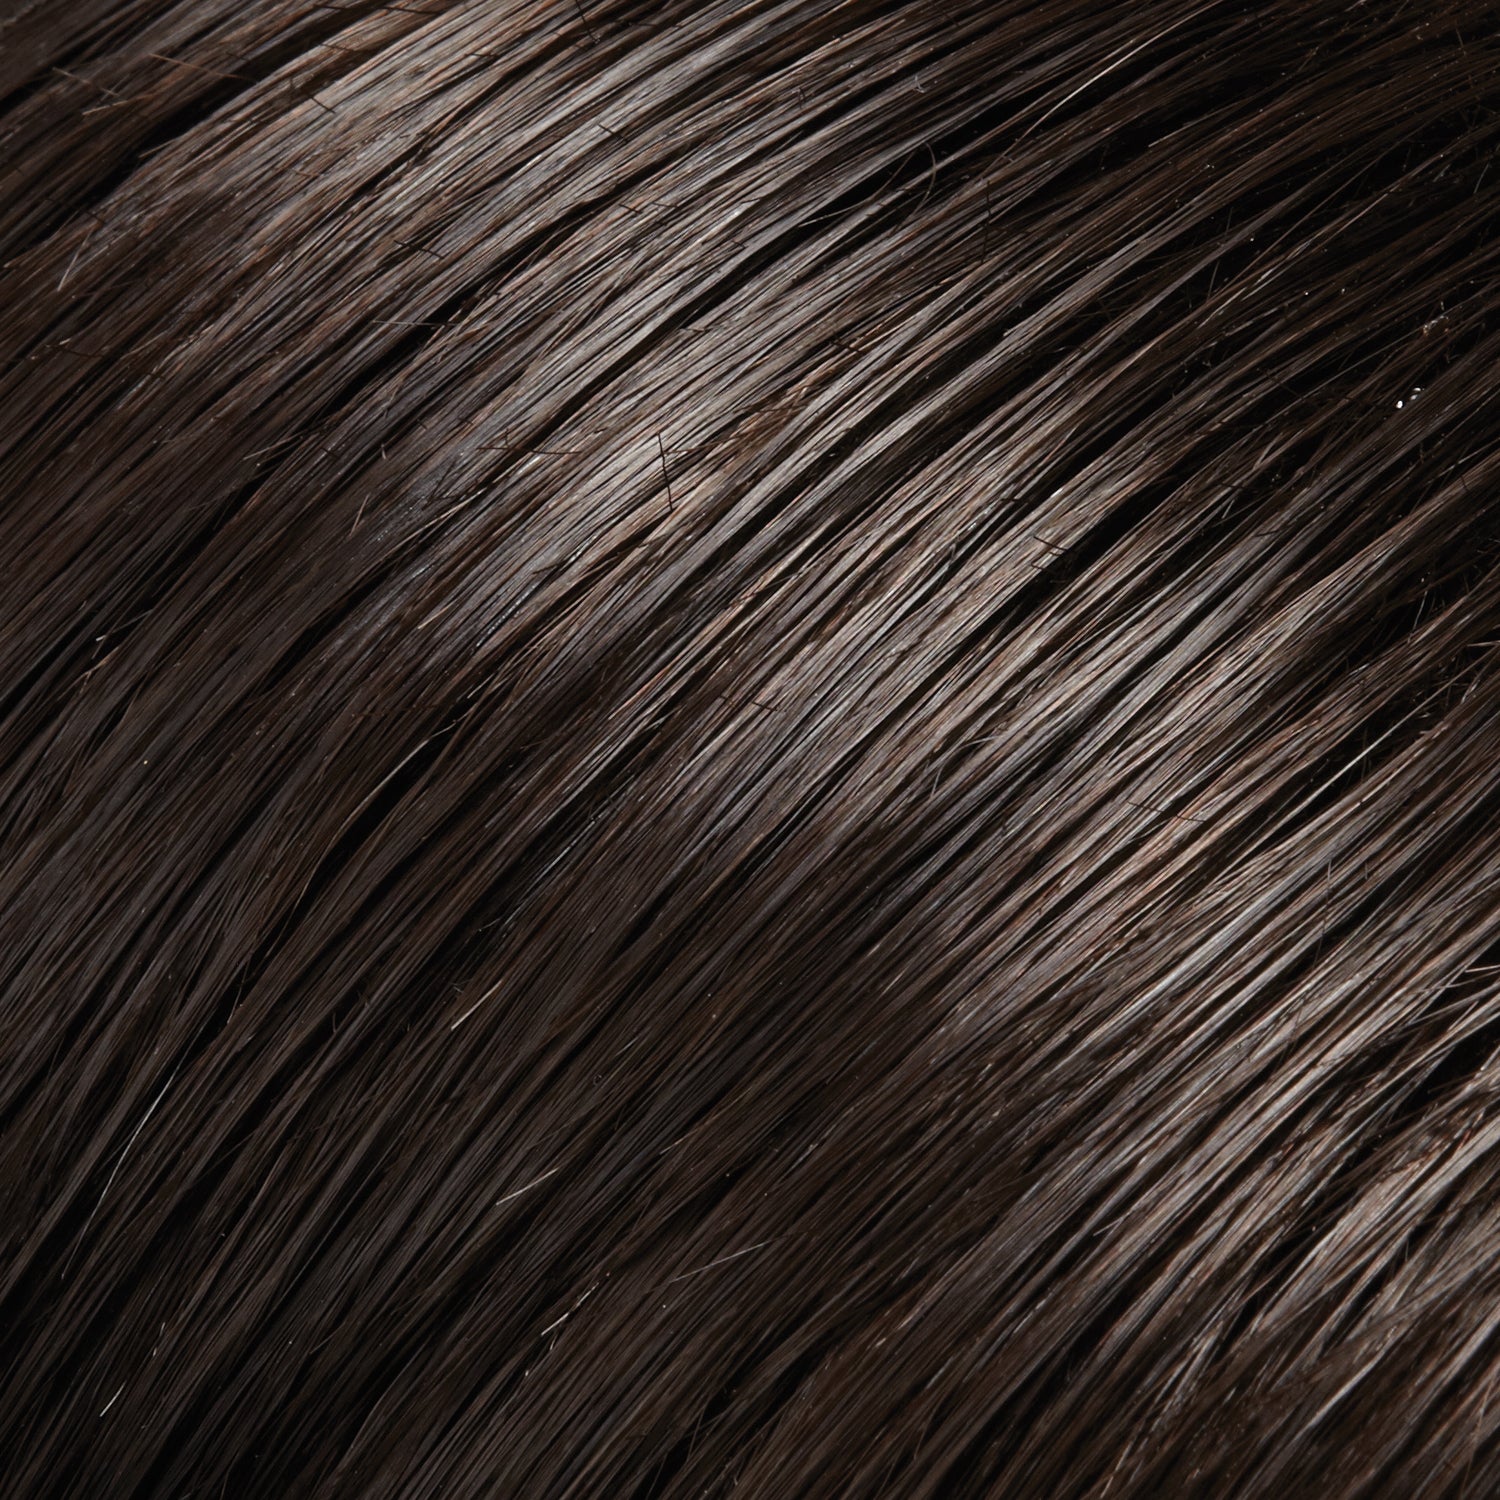 Lea wig - Jon Renau Human Hair Collection